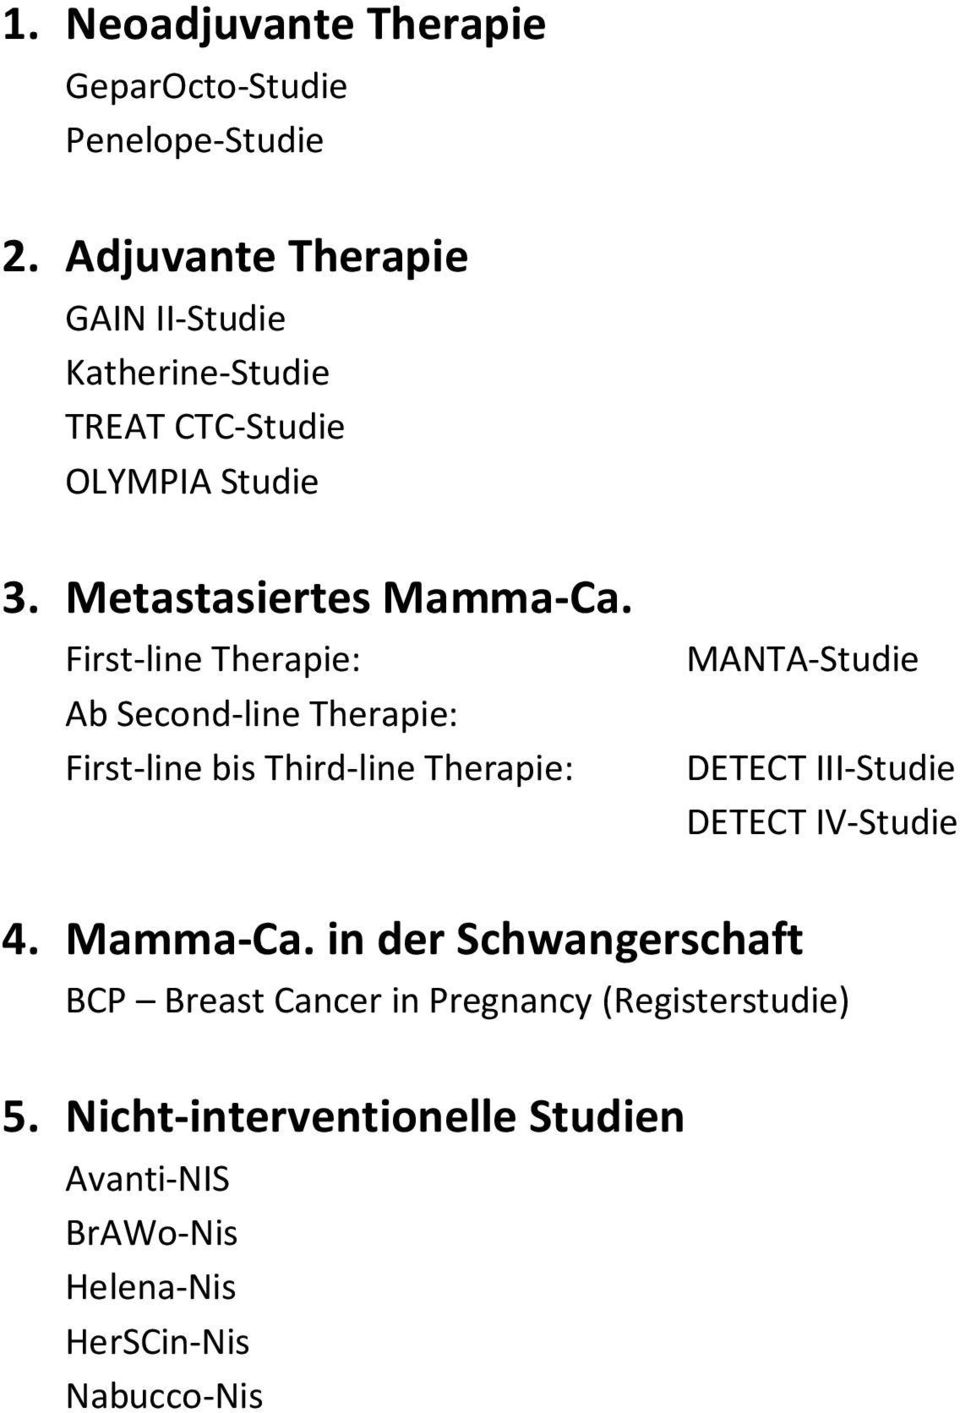 First-line Therapie: Ab Second-line Therapie: First-line bis Third-line Therapie: MANTA-Studie DETECT III-Studie